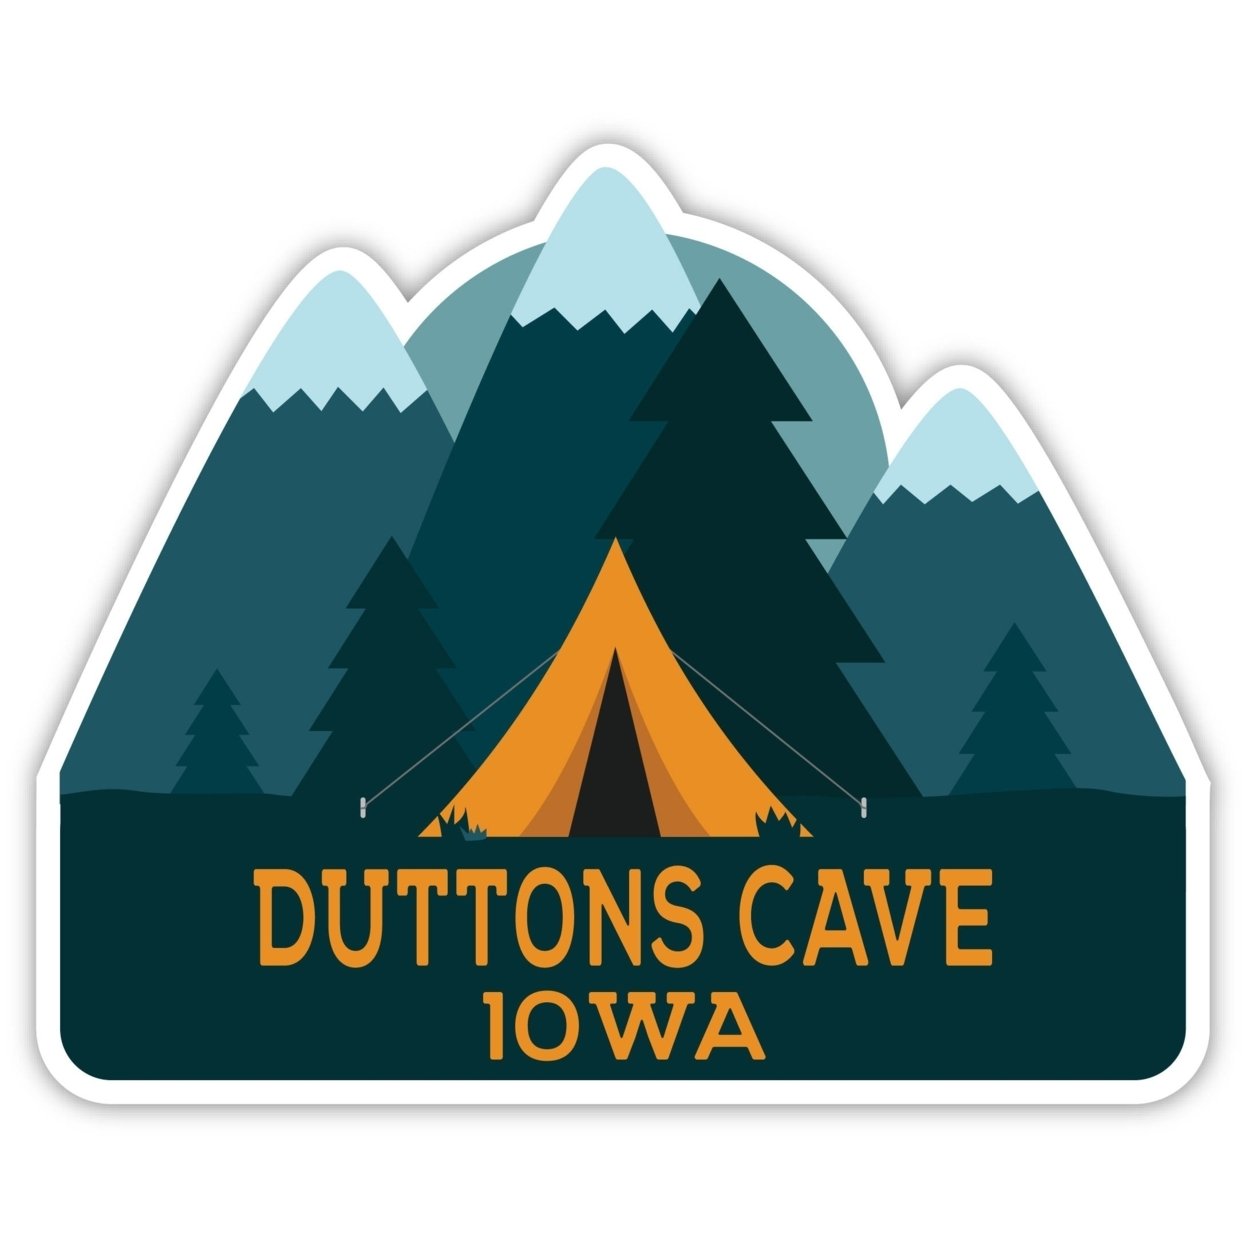 Duttons Cave Iowa Souvenir Decorative Stickers (Choose Theme And Size) - 4-Pack, 10-Inch, Tent